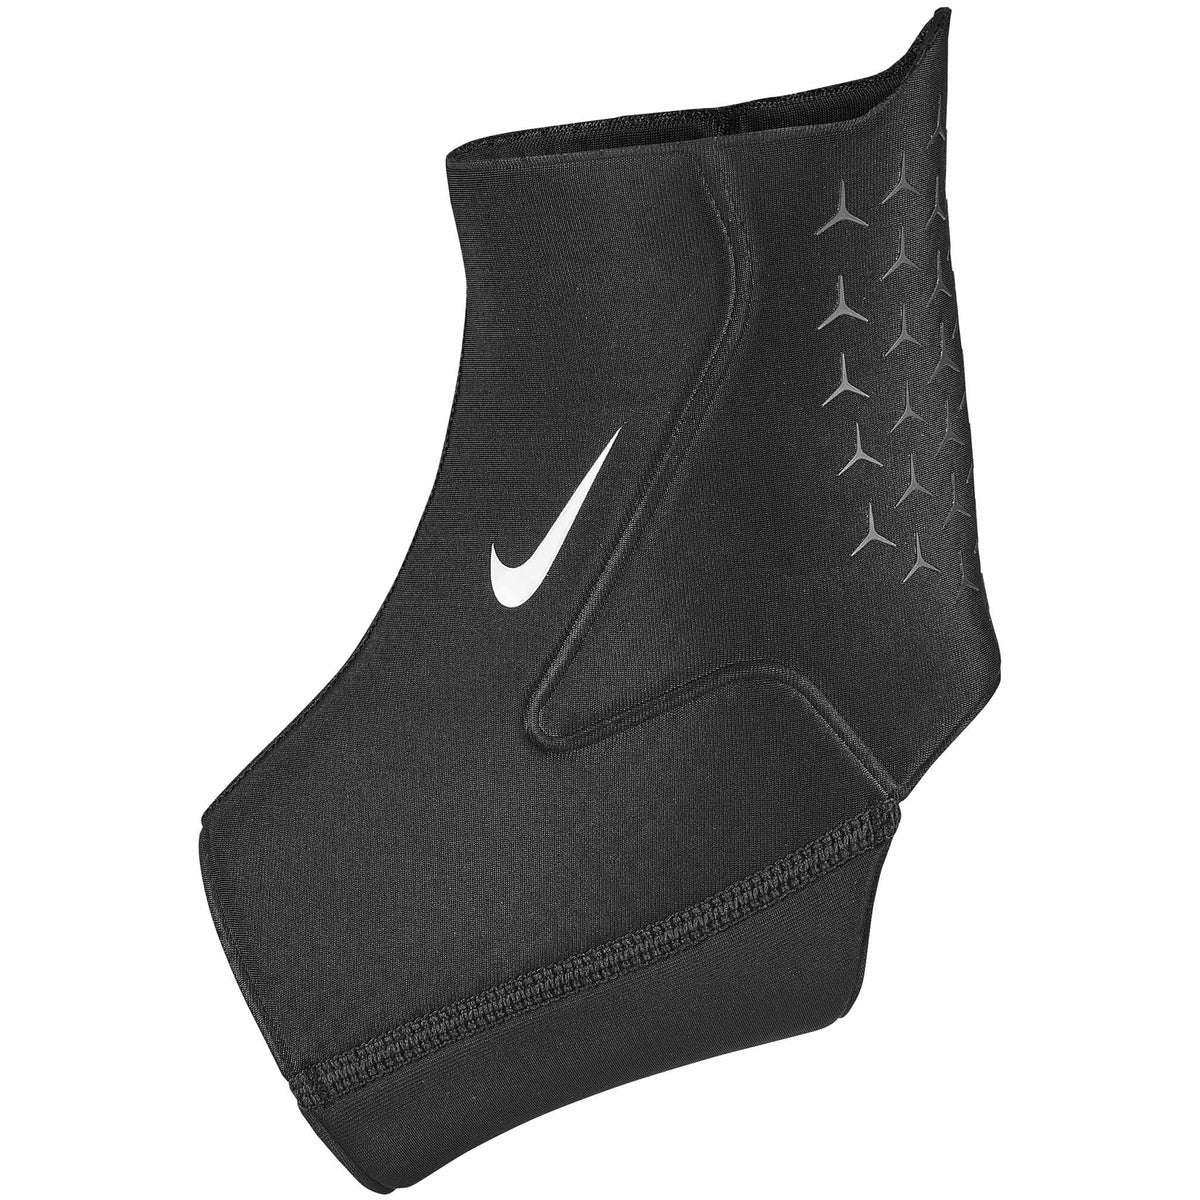 Nike Pro Ankle Sleeve 3.0 chevillère sport